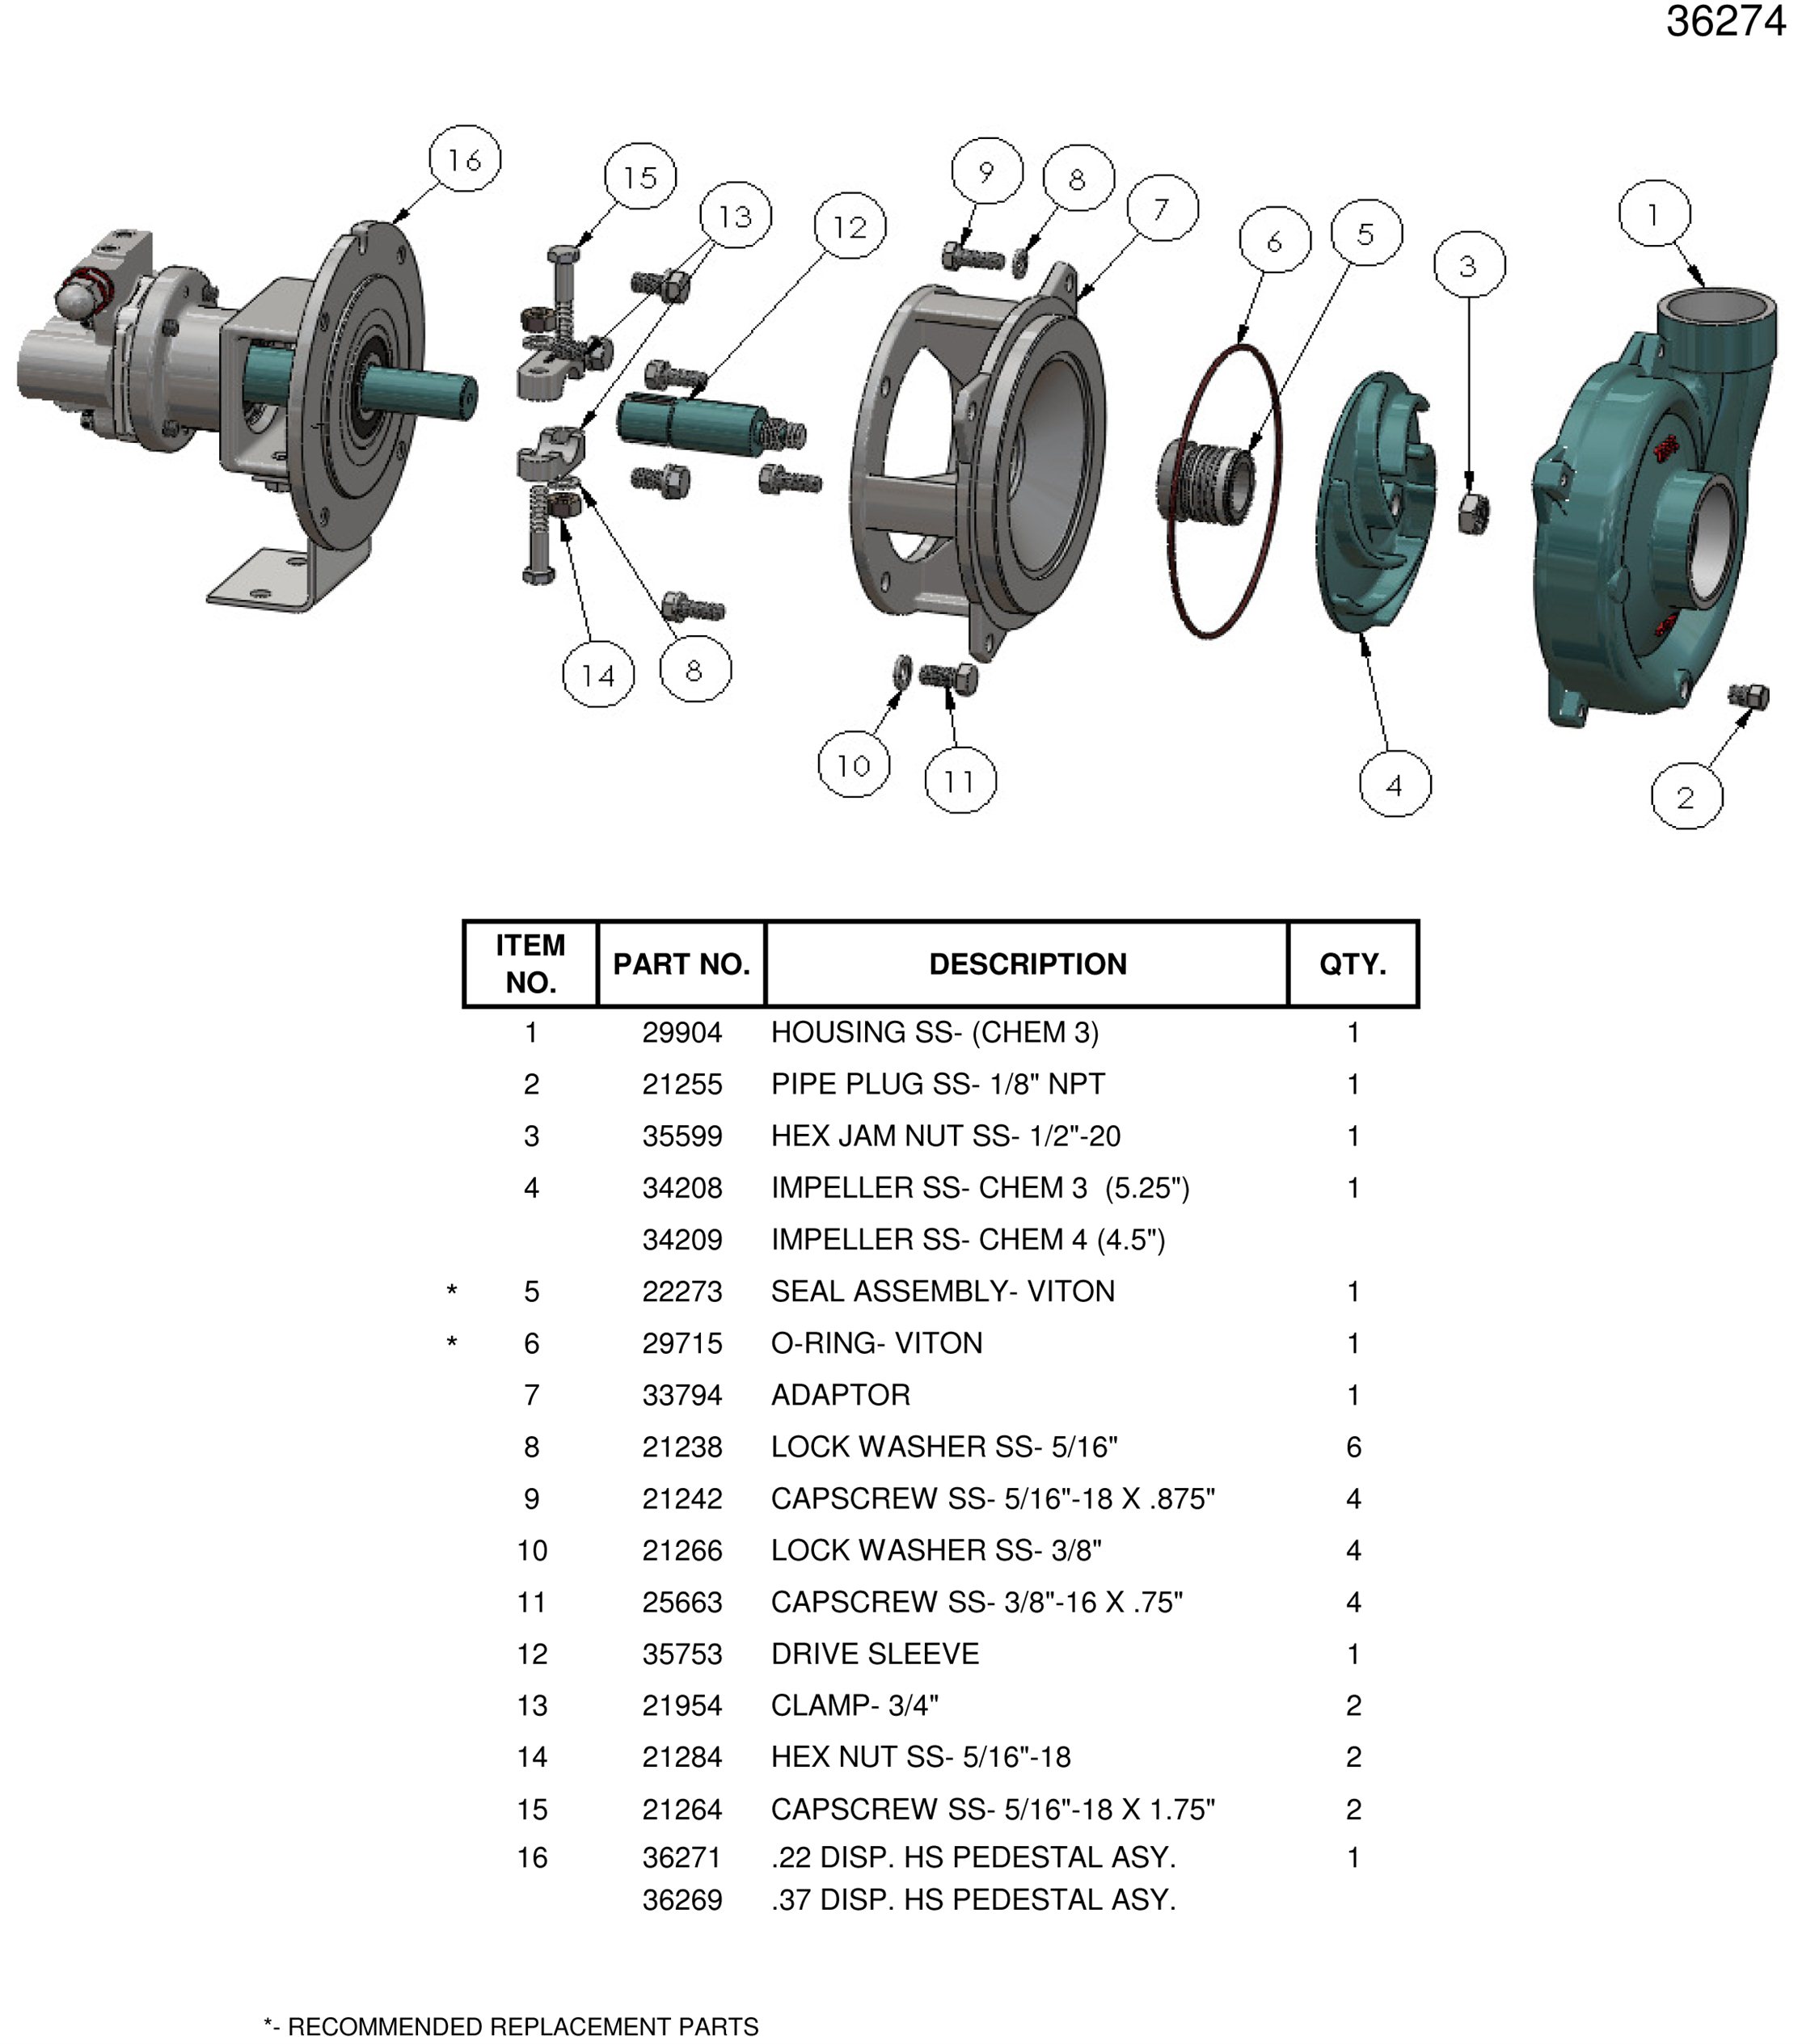 chemflo-3-hydraulic_parts-list-36274